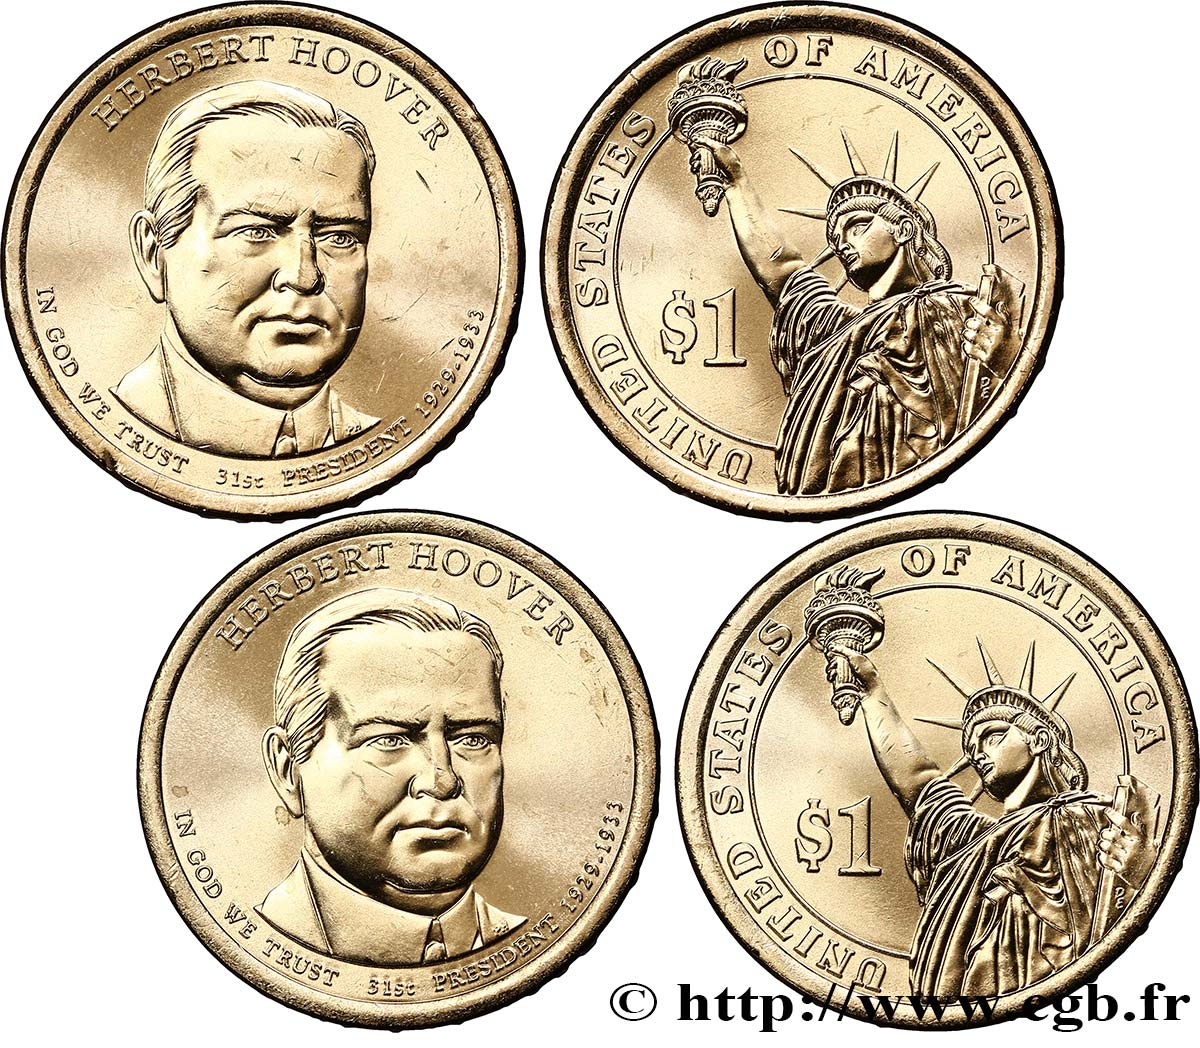 STATI UNITI D AMERICA Lot de deux monnaies 1 Dollar Herbert Hoover 2014 Denver FDC 